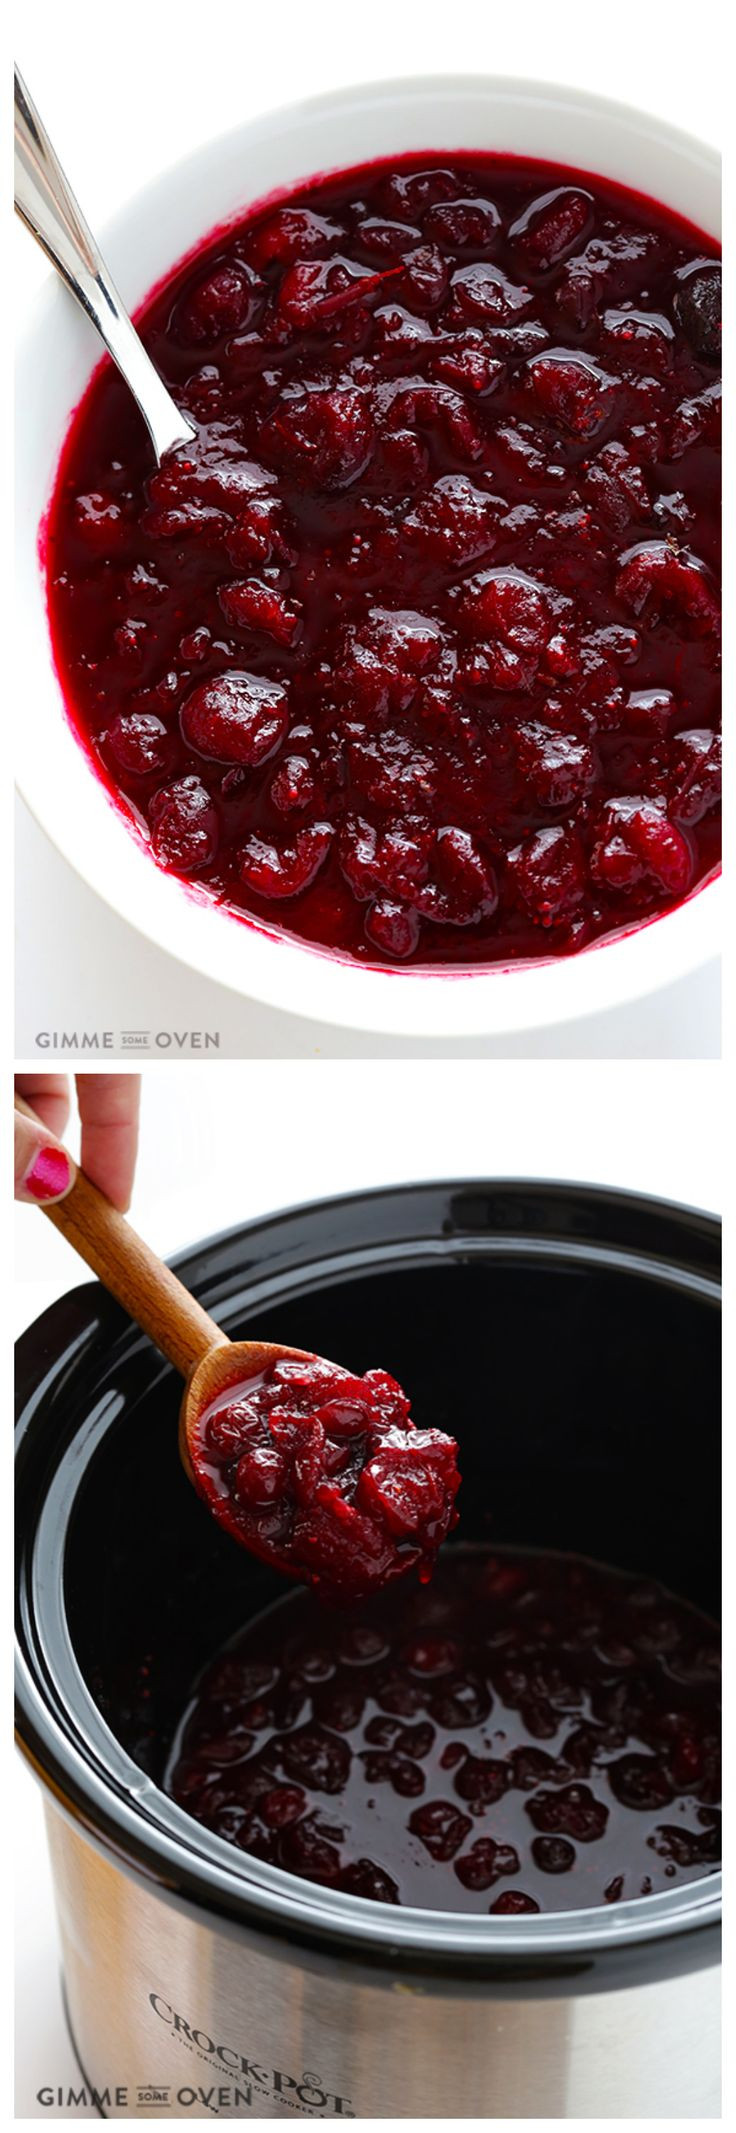 Cranberry Recipes For Thanksgiving
 Best 25 Cranberry sauce ideas on Pinterest